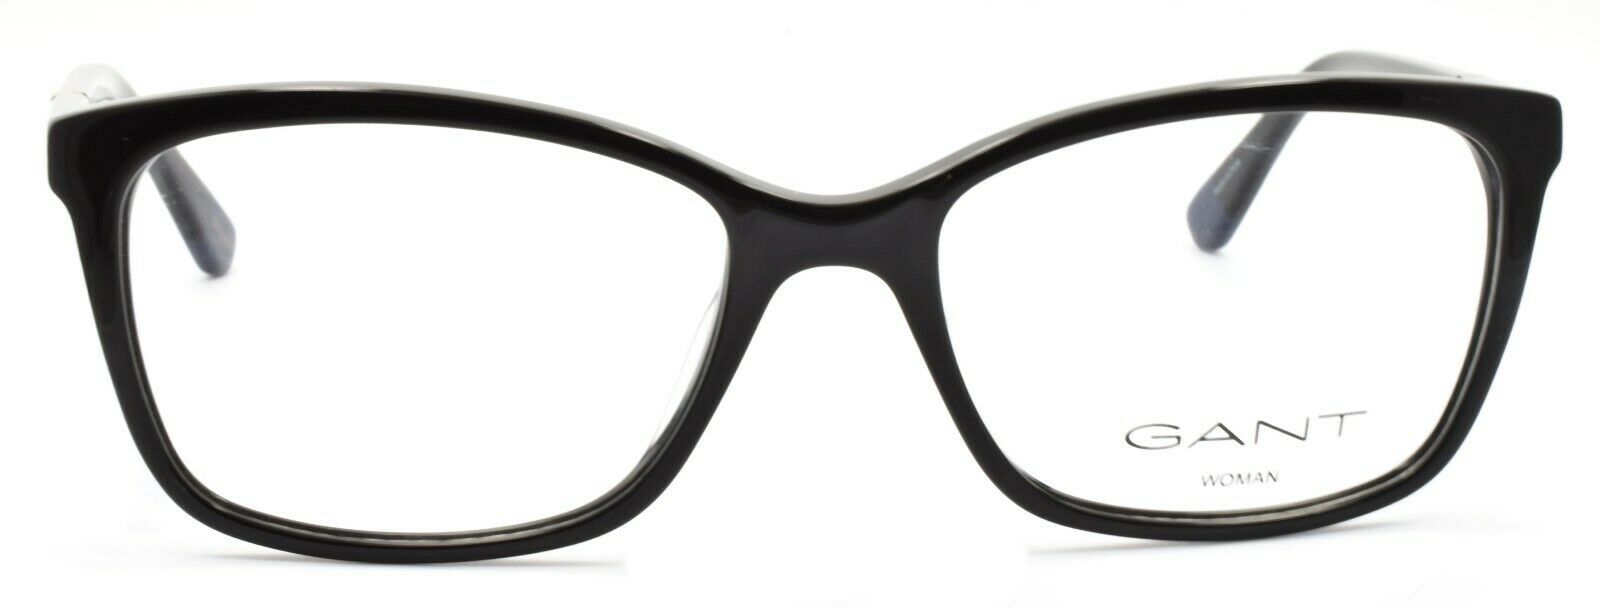 2-GANT GA4070 001 Women's Eyeglasses Frames 53-17-135 Shiny Black + CASE-664689812394-IKSpecs